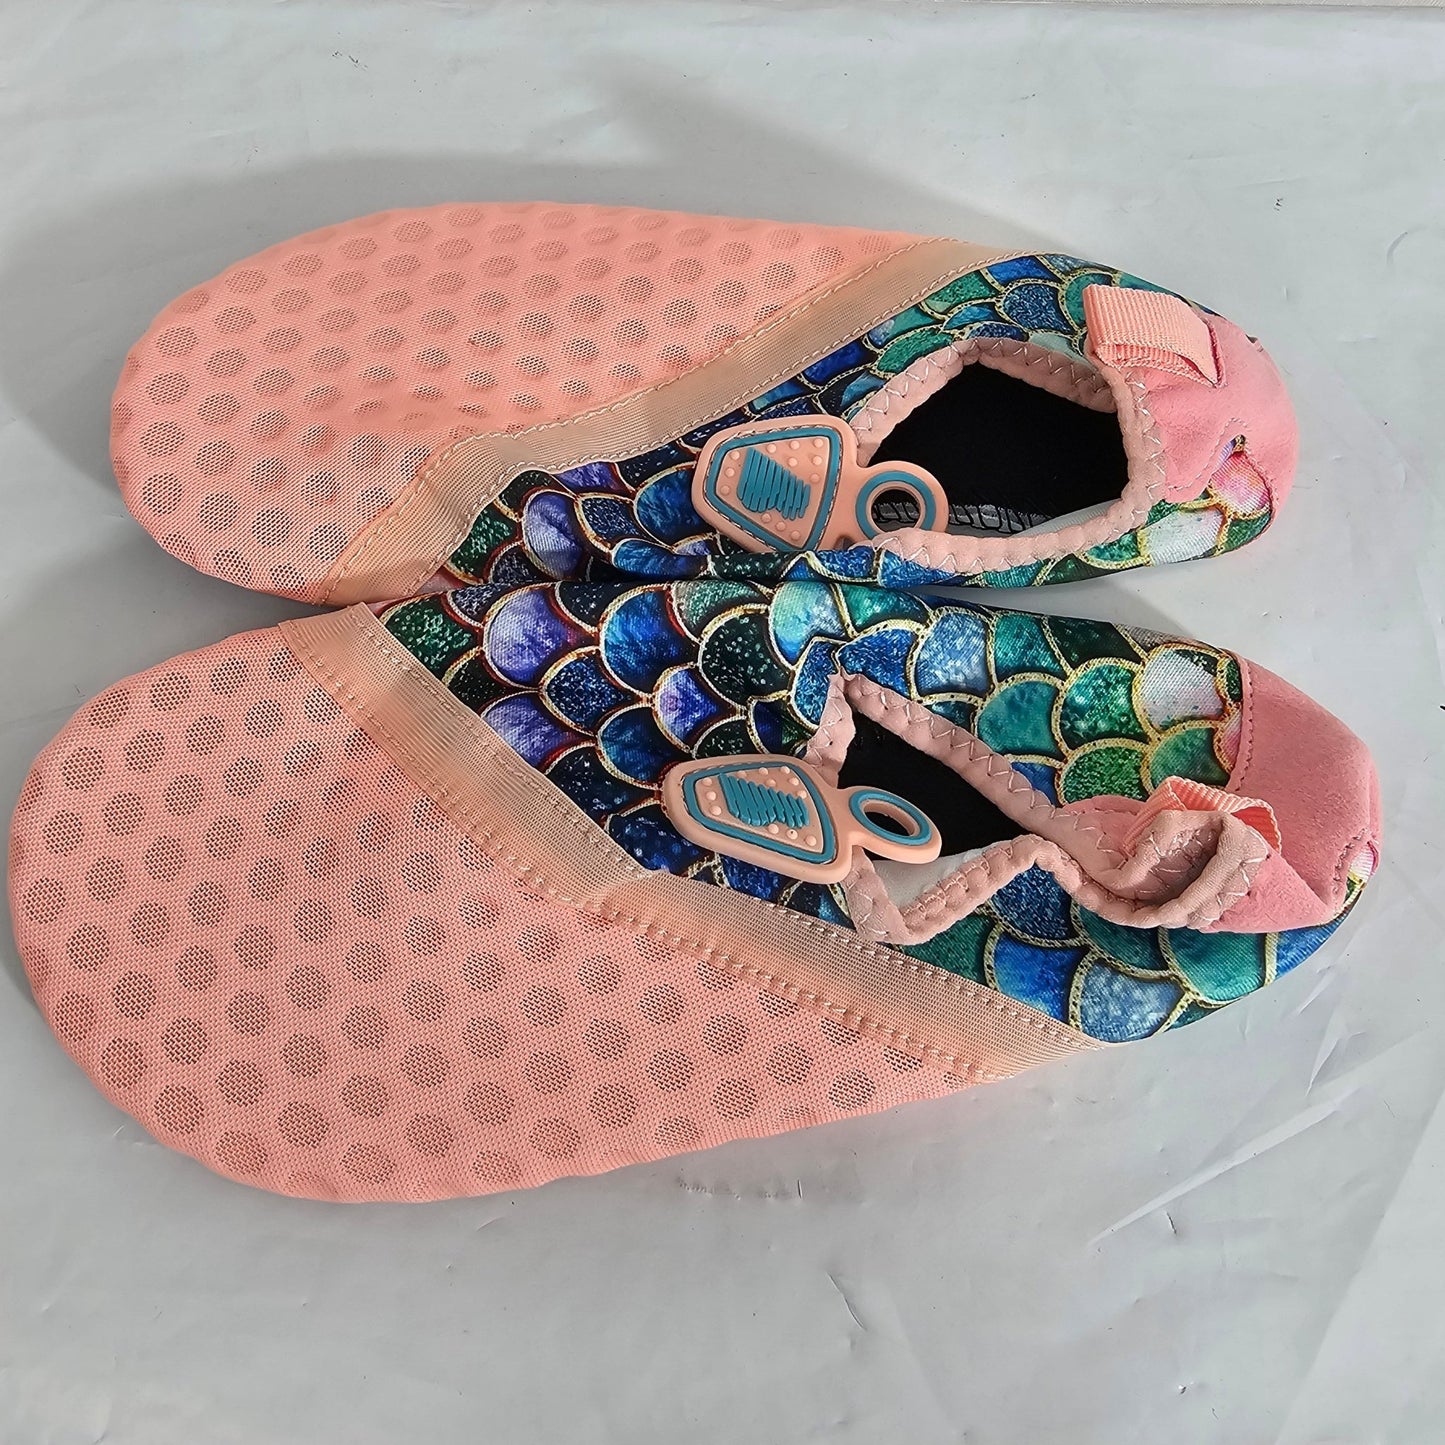 BARERUN Barefoot Quick-Dry Water Sports Shoes Size 4.5-5.5 Women - DQ Distribution